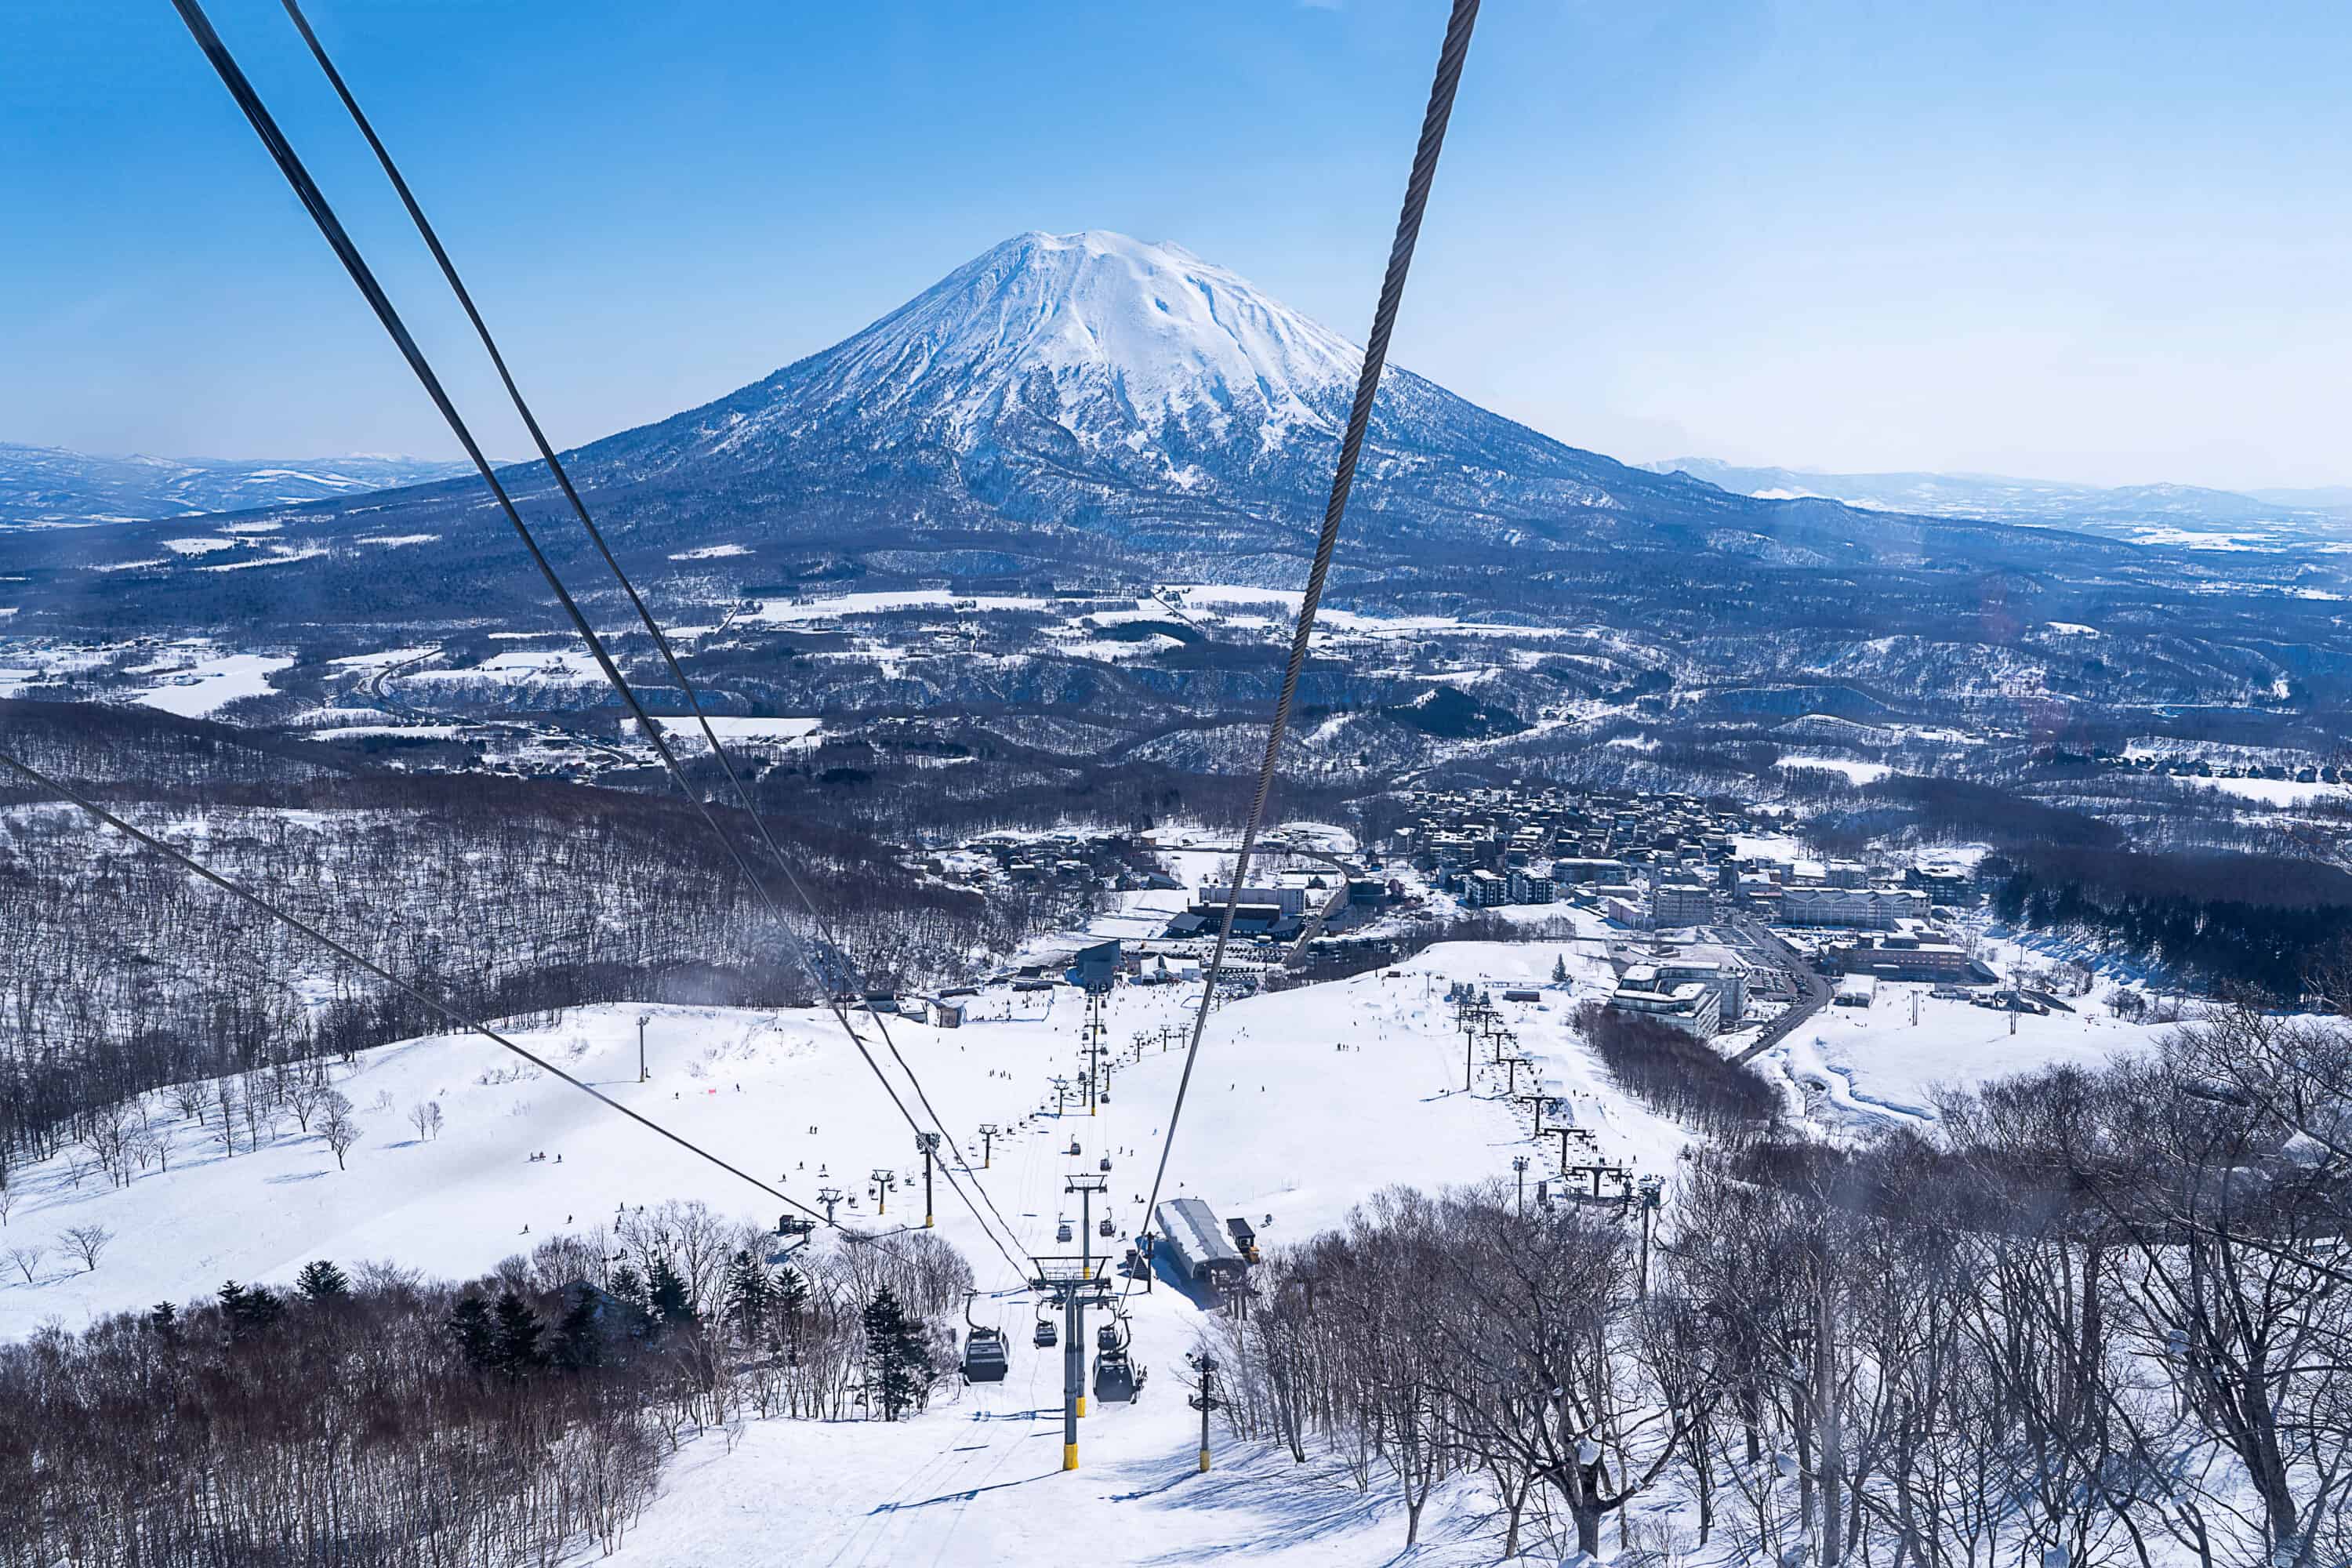 Yotei Mountain view from Grand Hirafu Gondola in the winter.